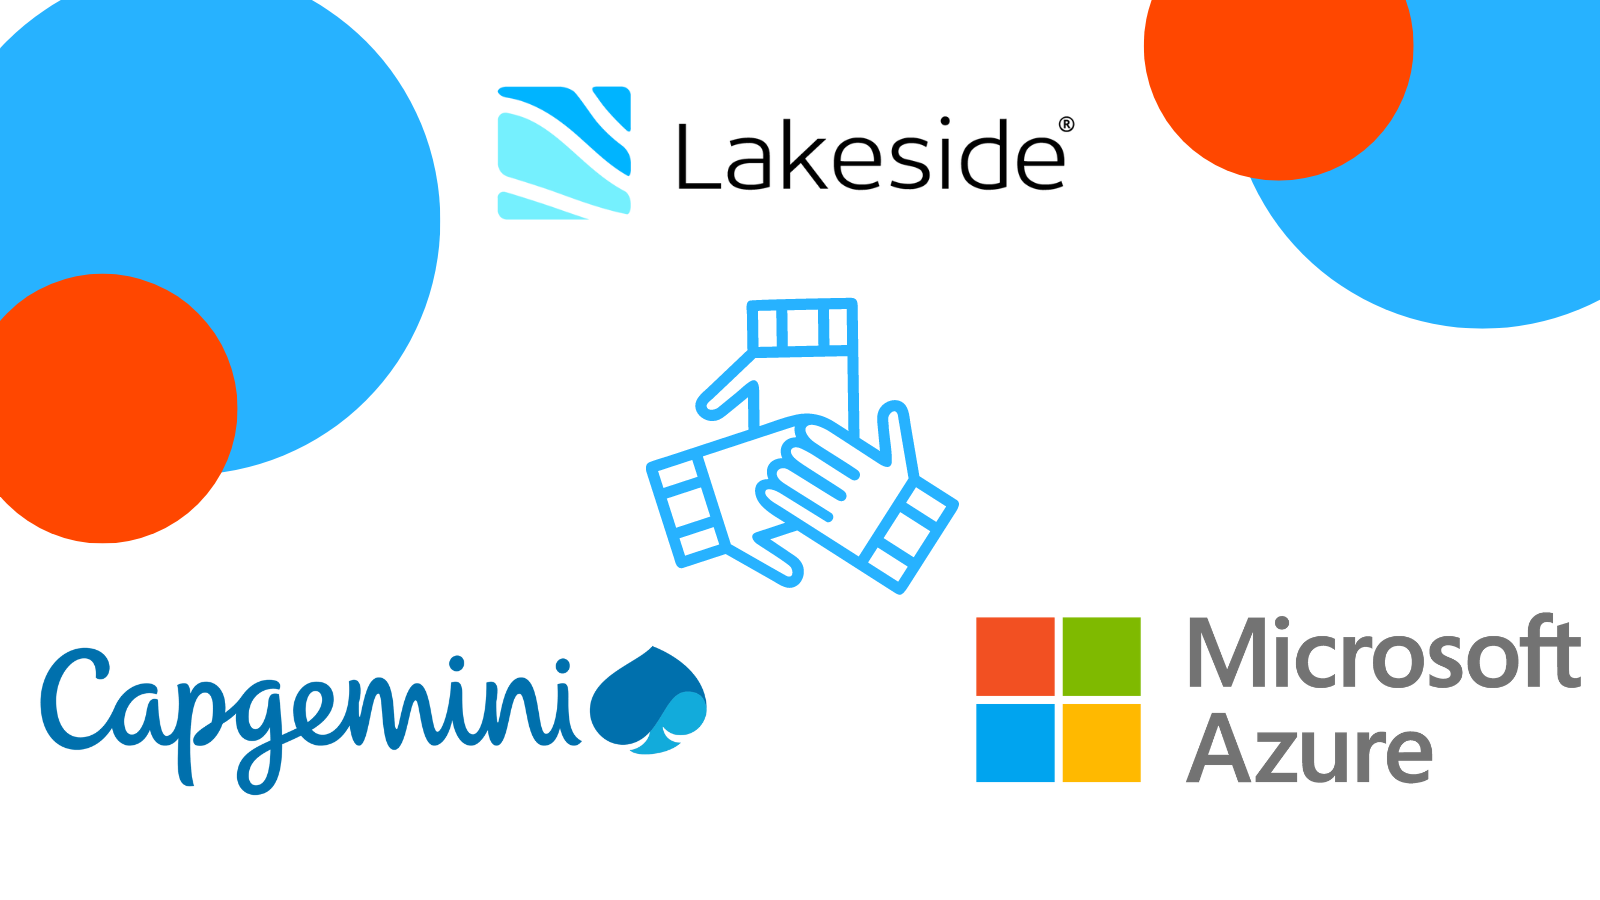 Lakeside, Capgemini, and Microsoft Azure logos surrounding an icon of three hands stacked.